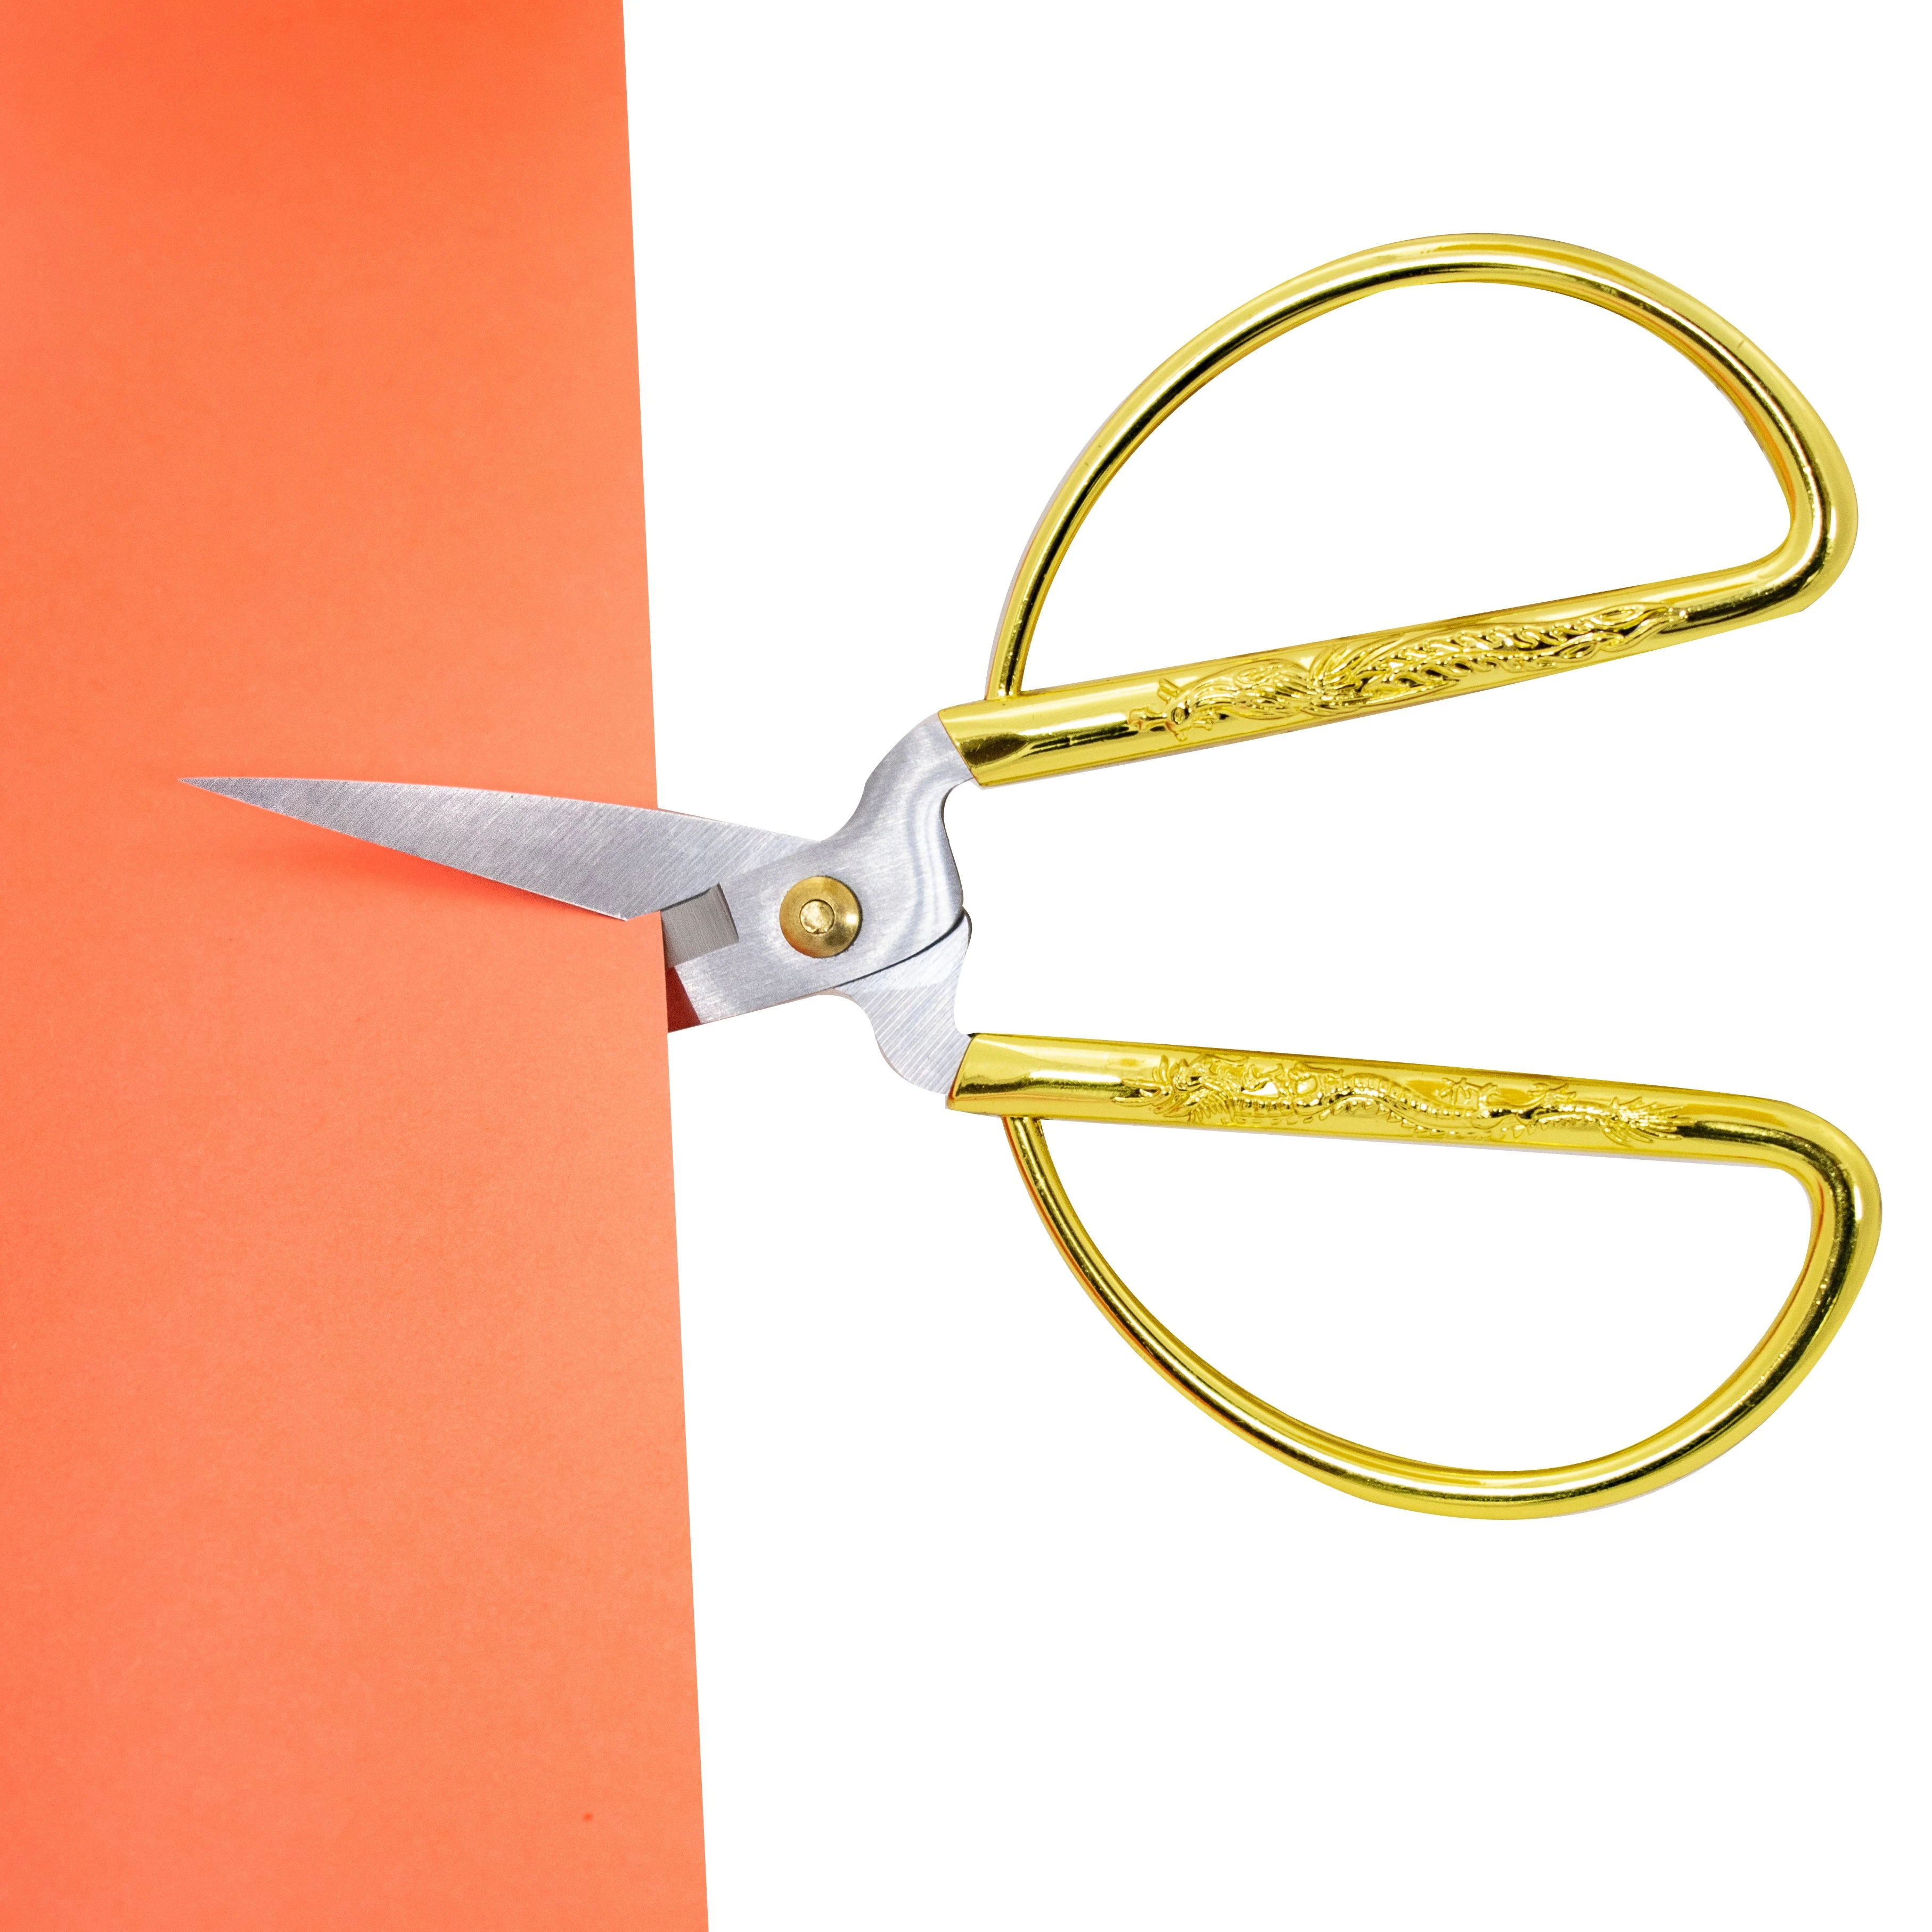 Amazon hot sale Household Tailor Scissors Stainless Steel cutting multi purpose scissors